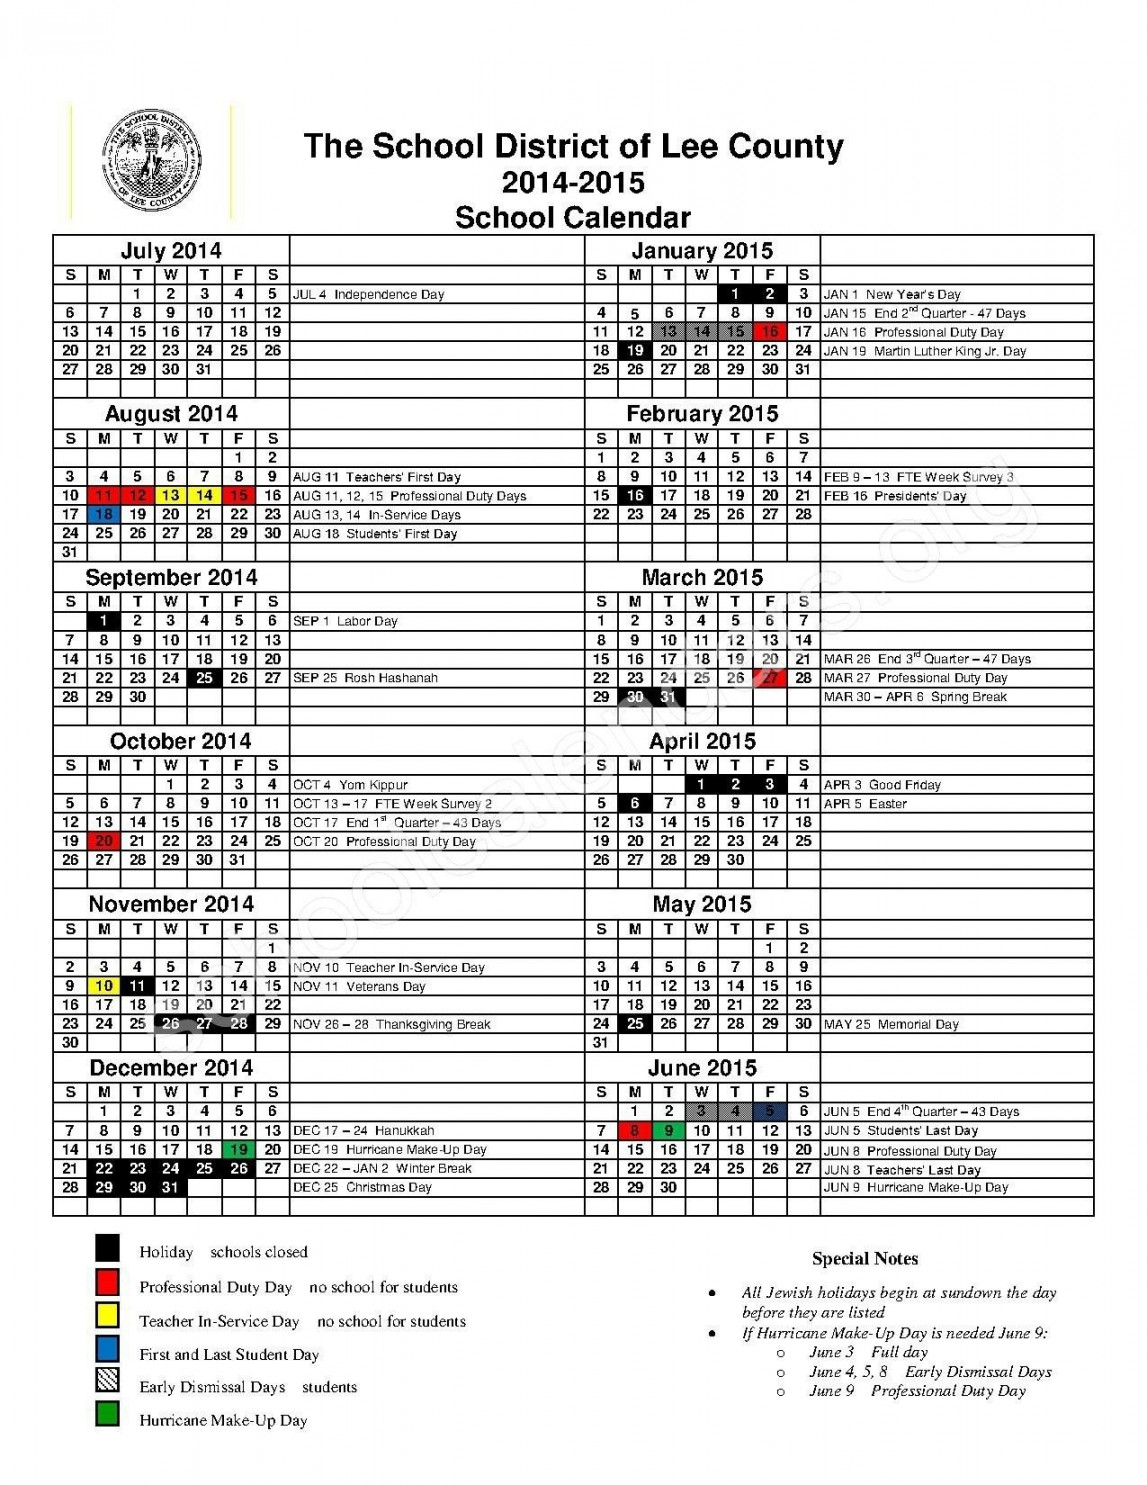 Dashing School Calendar Lee County  School calendar, Homeschool